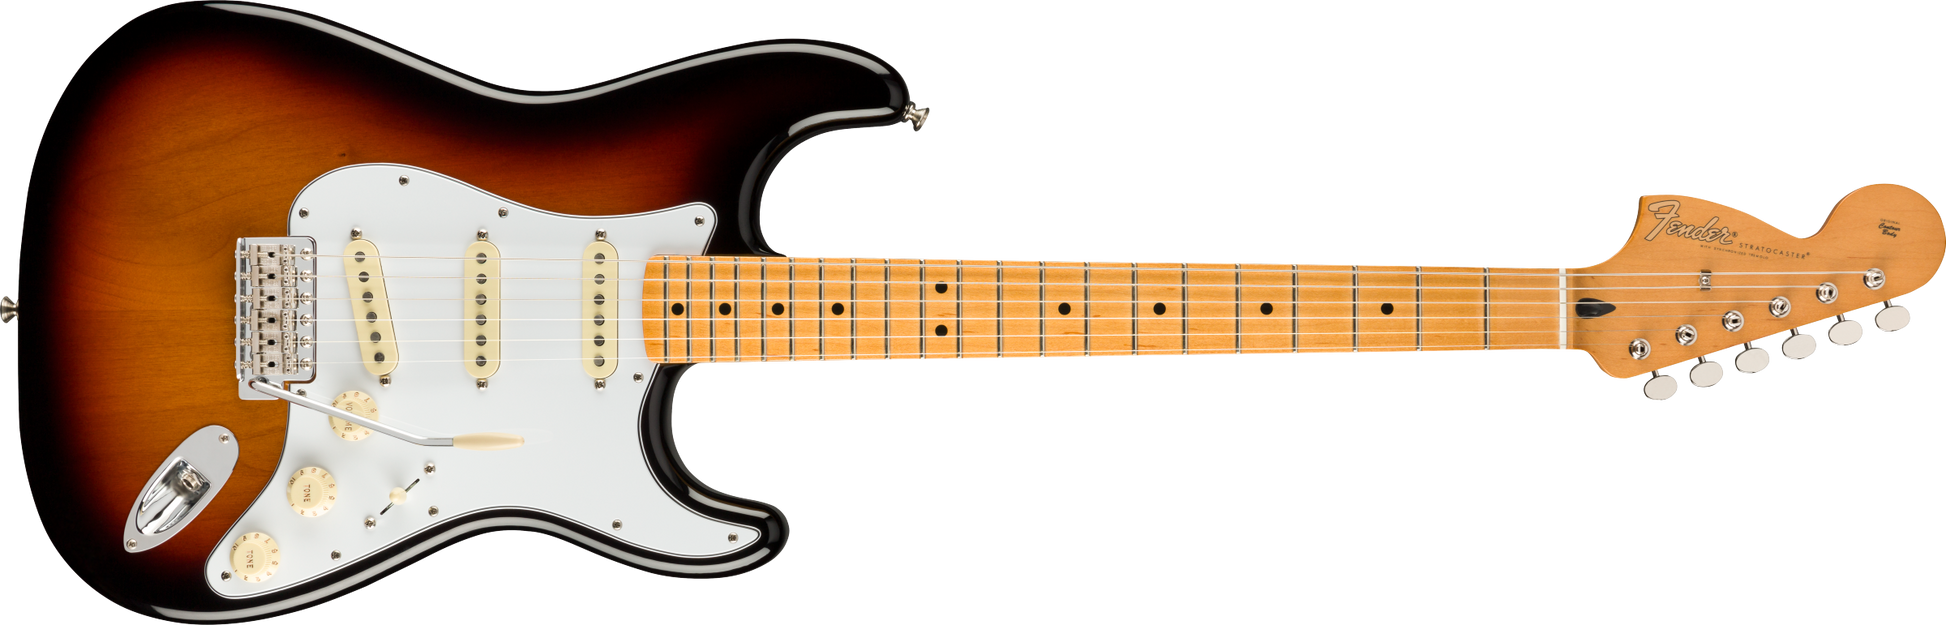 jimi hendrix guitar silhouette